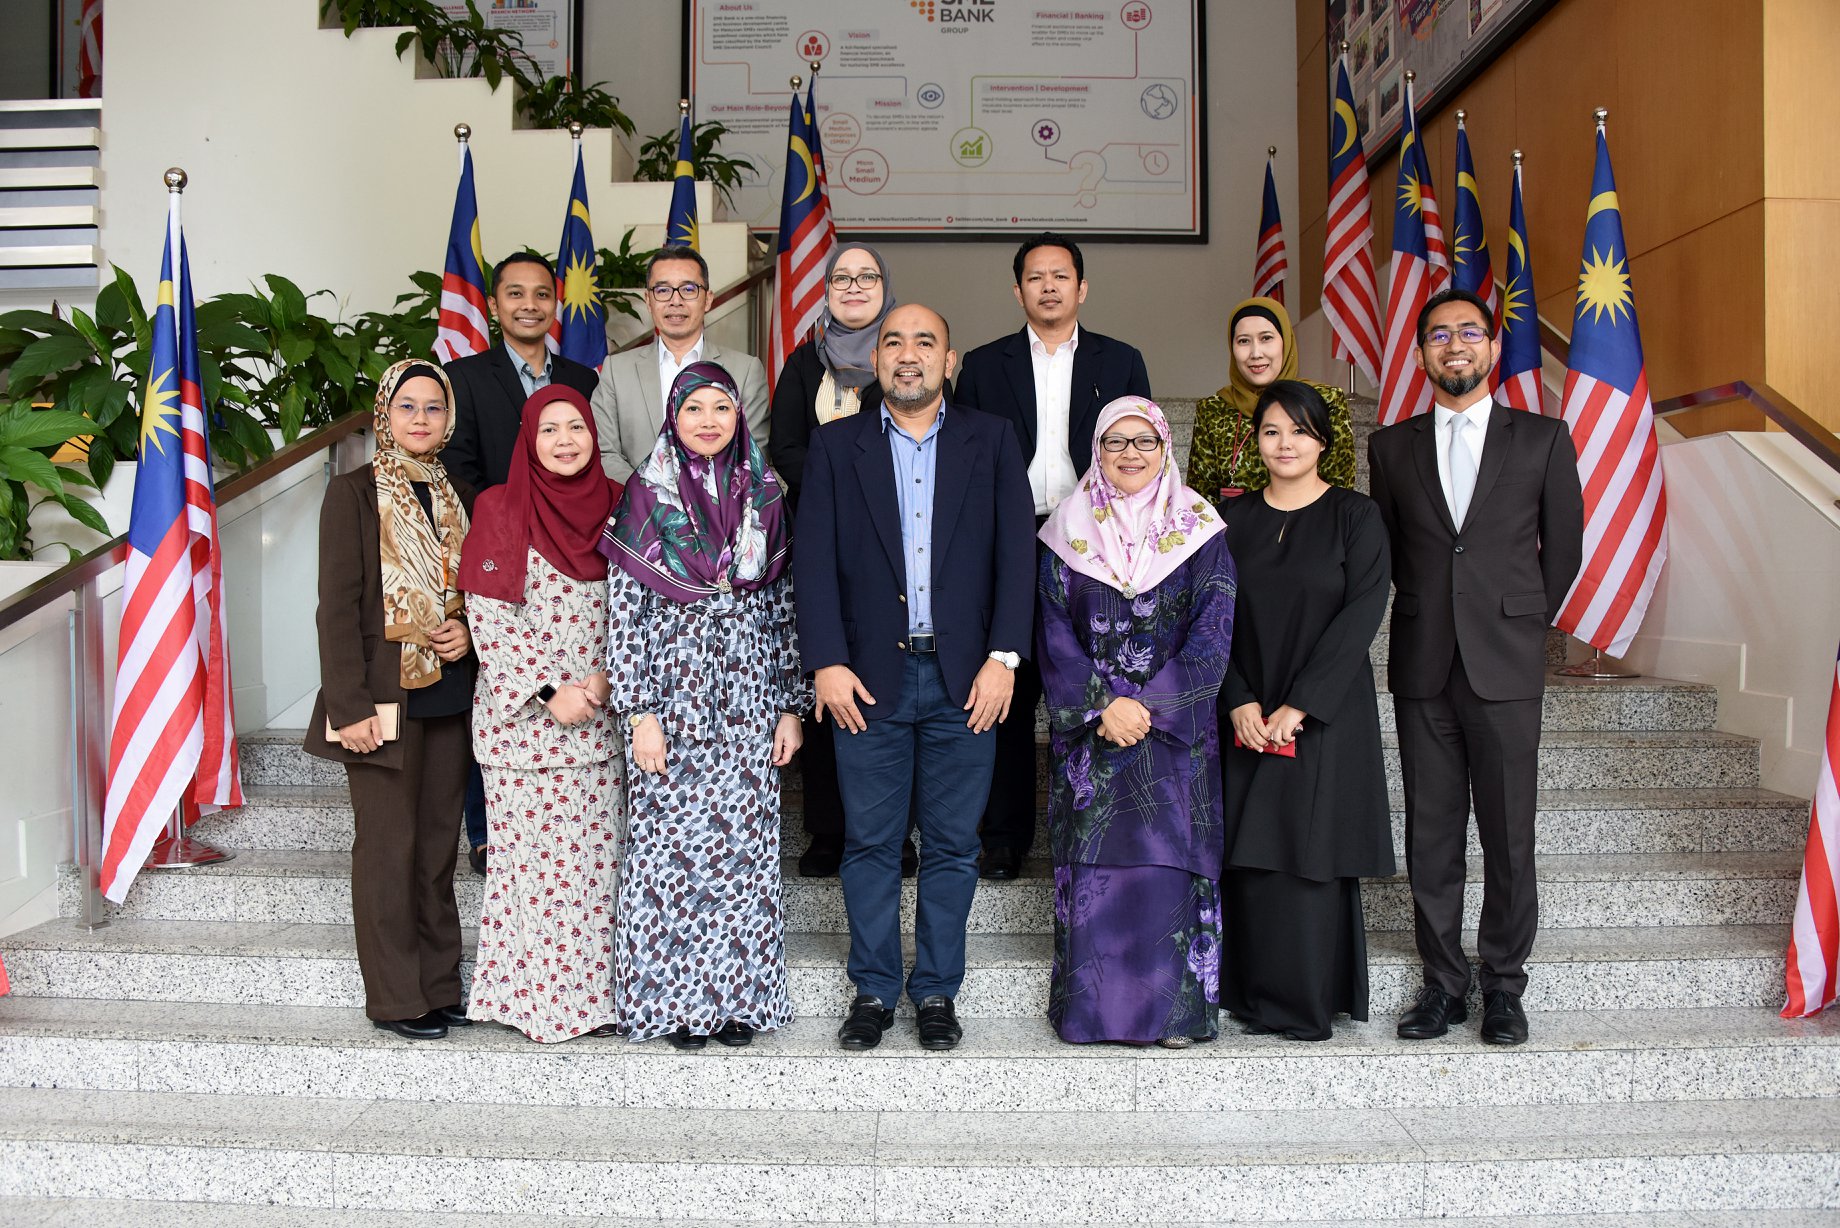 SME Bank terima lawatan dari Perbadanan Tabung Amanah Islam Brunei